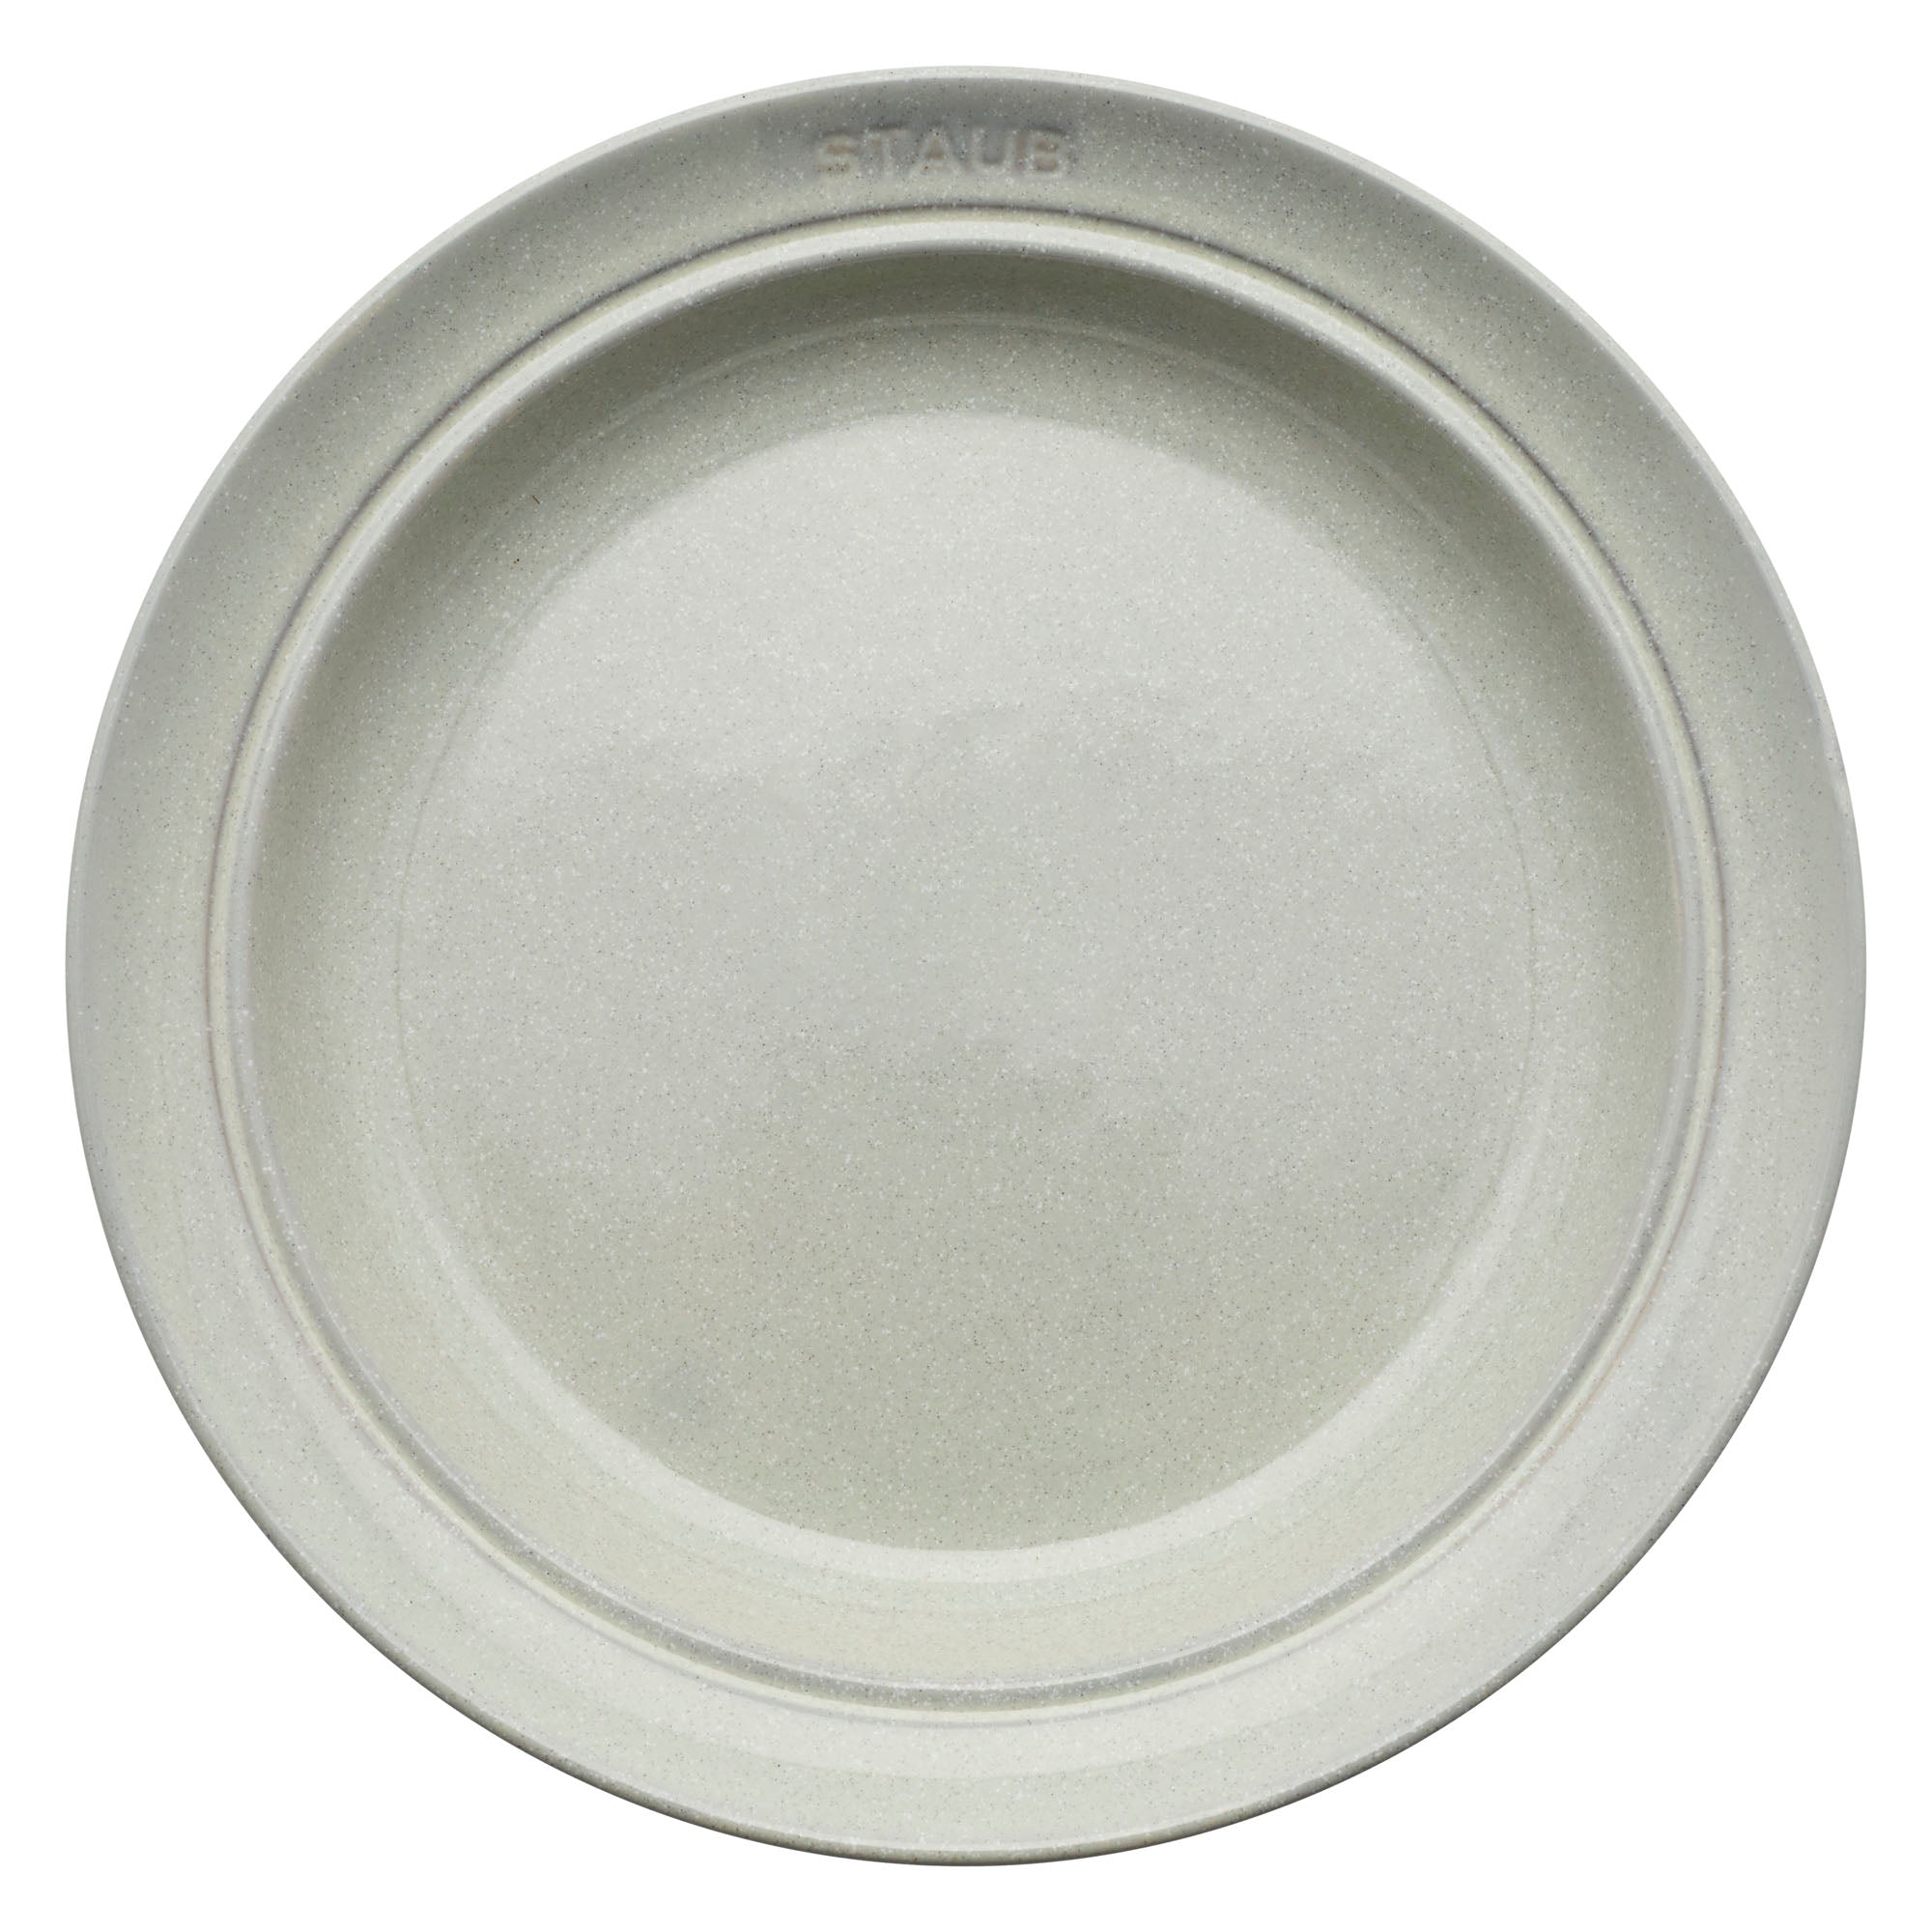  STAUB Ceramic 4-pc Baking Dish and Bowl Set - White: Home &  Kitchen